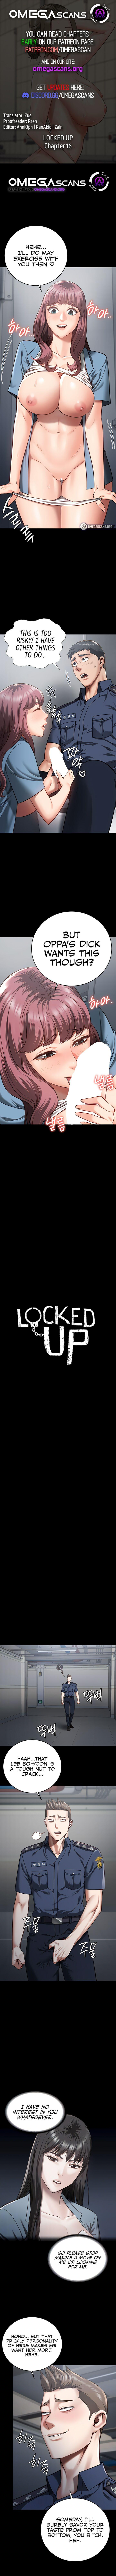 Locked Up 151